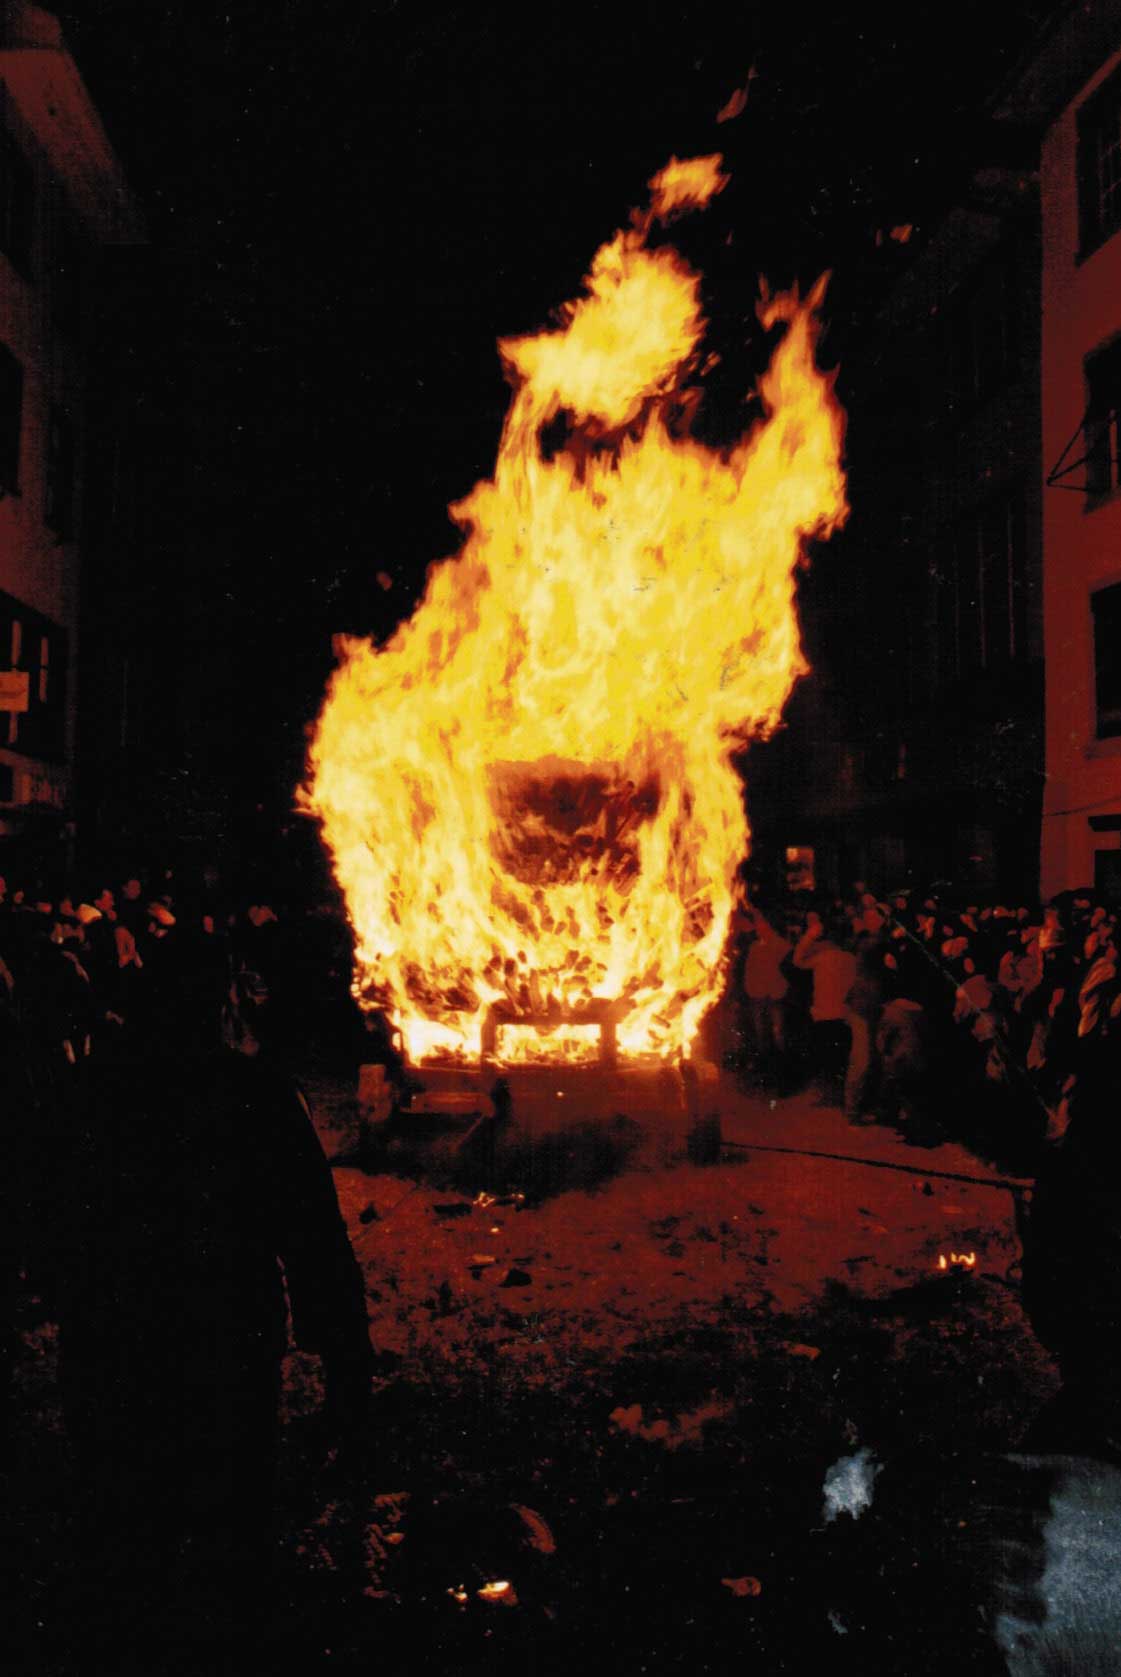 La foule des spectateurs recule devant le brasier infernal, 2004 © Hanspeter Meyer